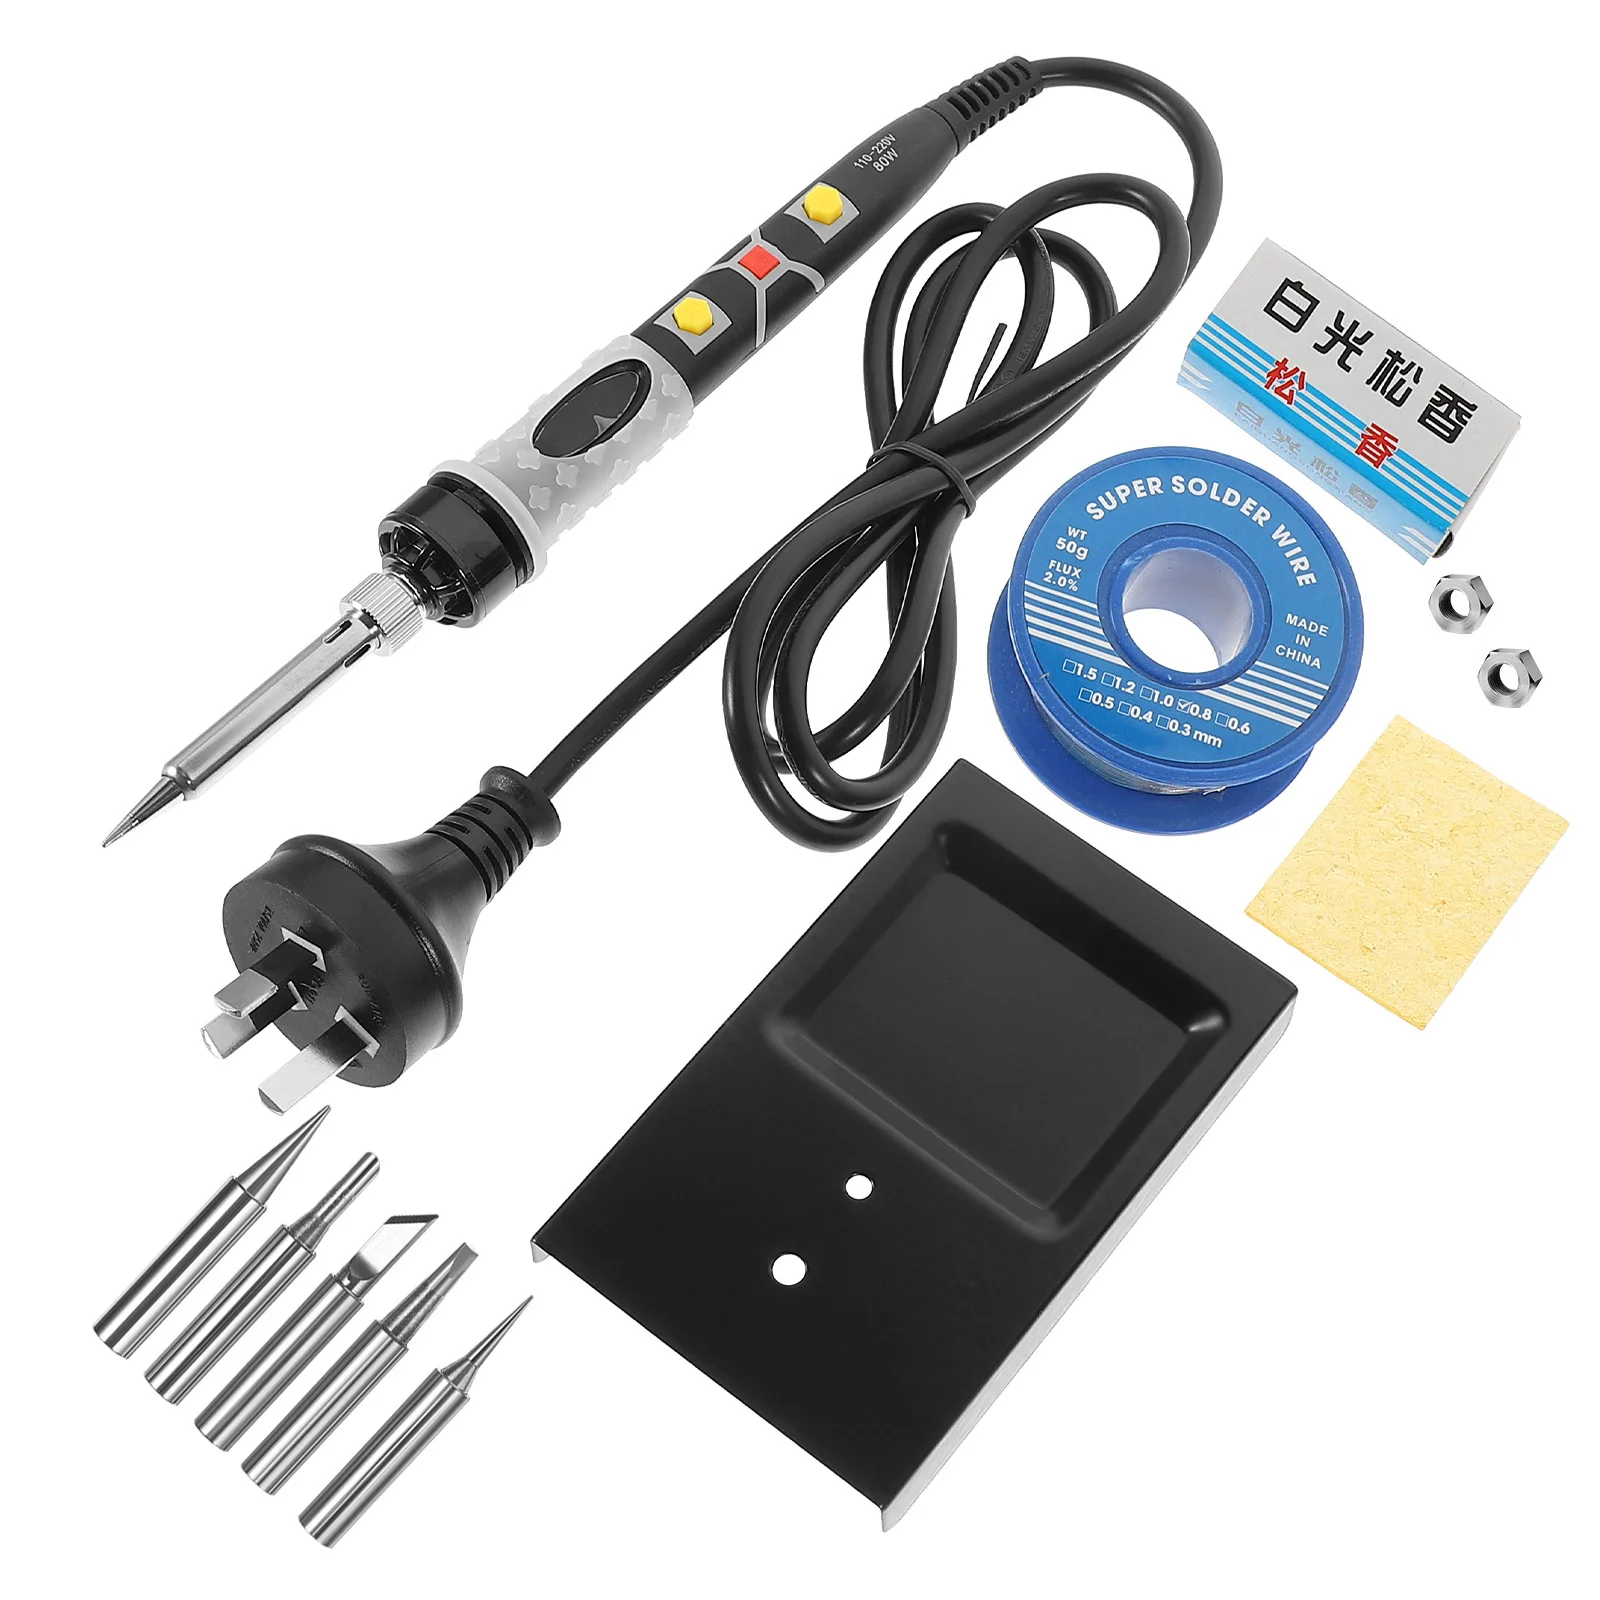 

10Pcs/Set Electronic Soldering Iron Kit 80W Adjustable Temperature LCD Digital Welding Tools Kit for Repair (AU Plug)